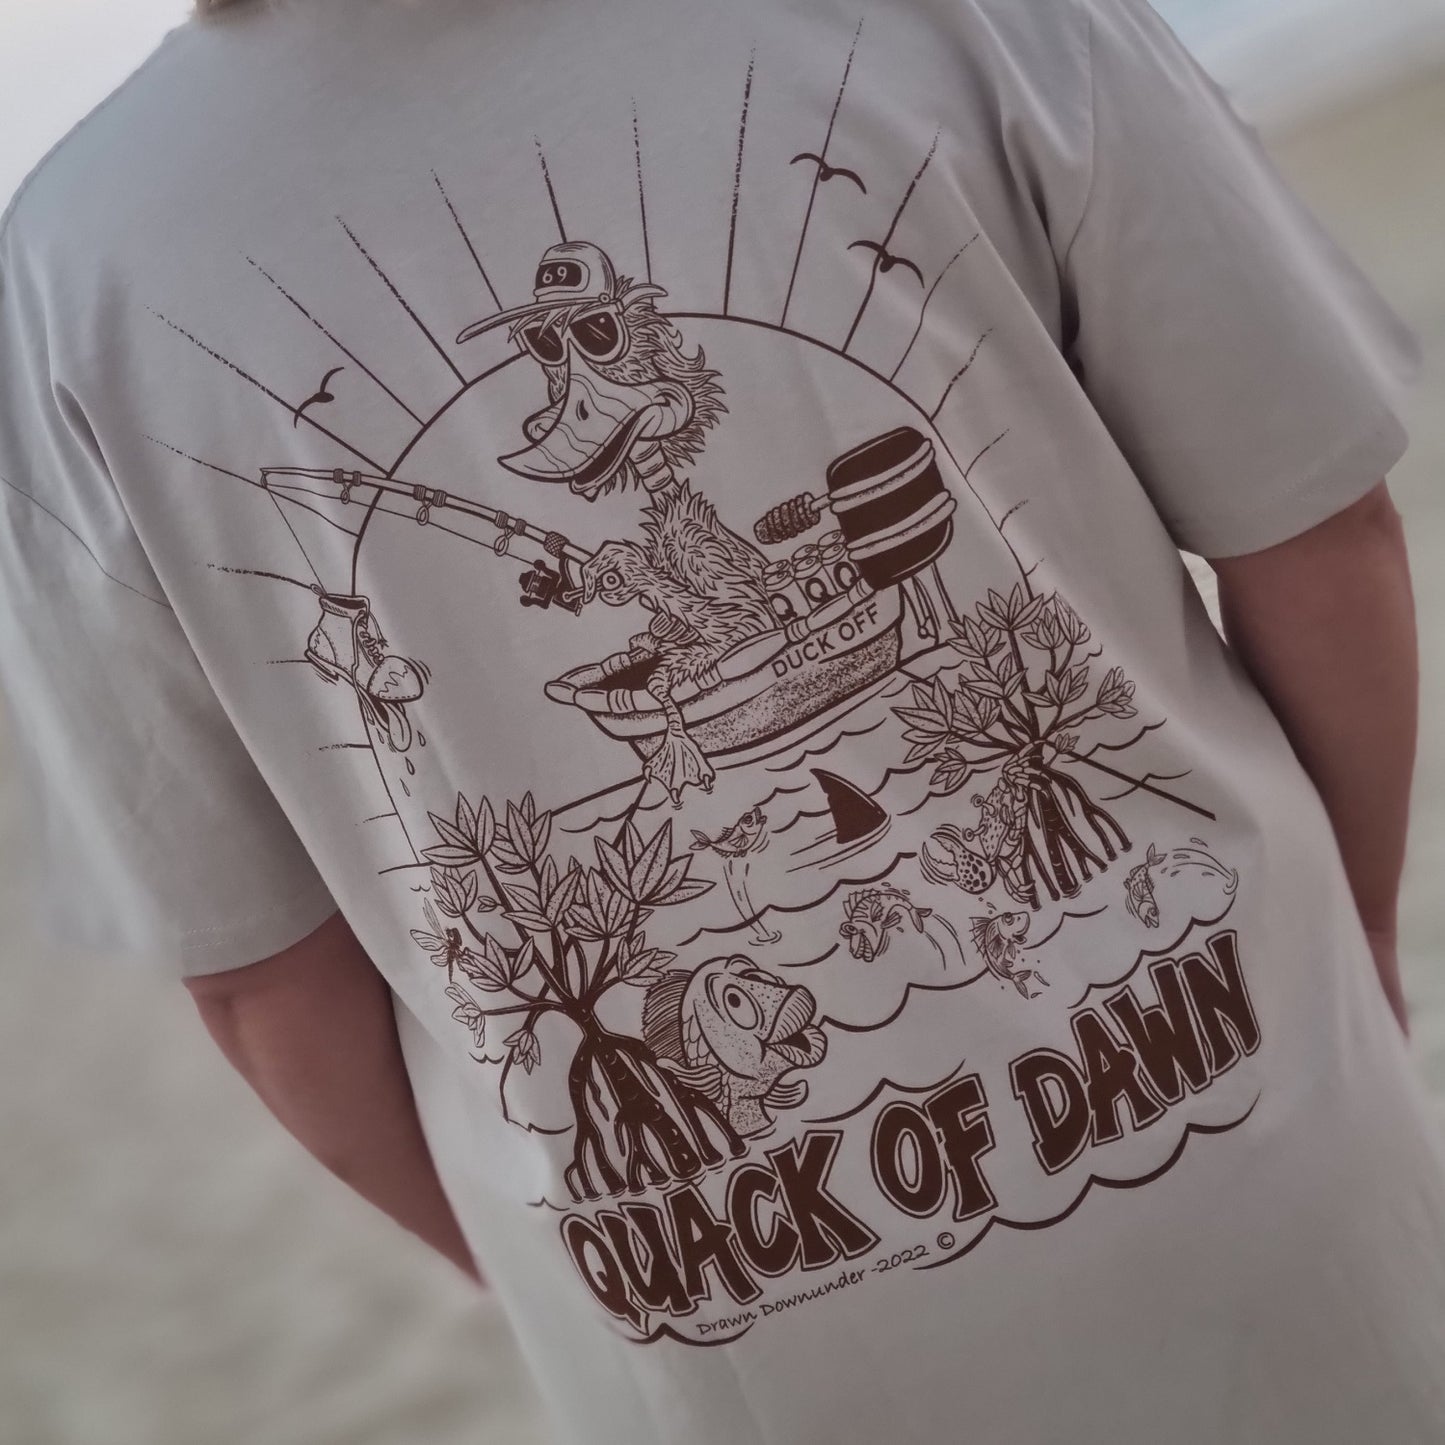 Quack Of Dawn T-Shirt